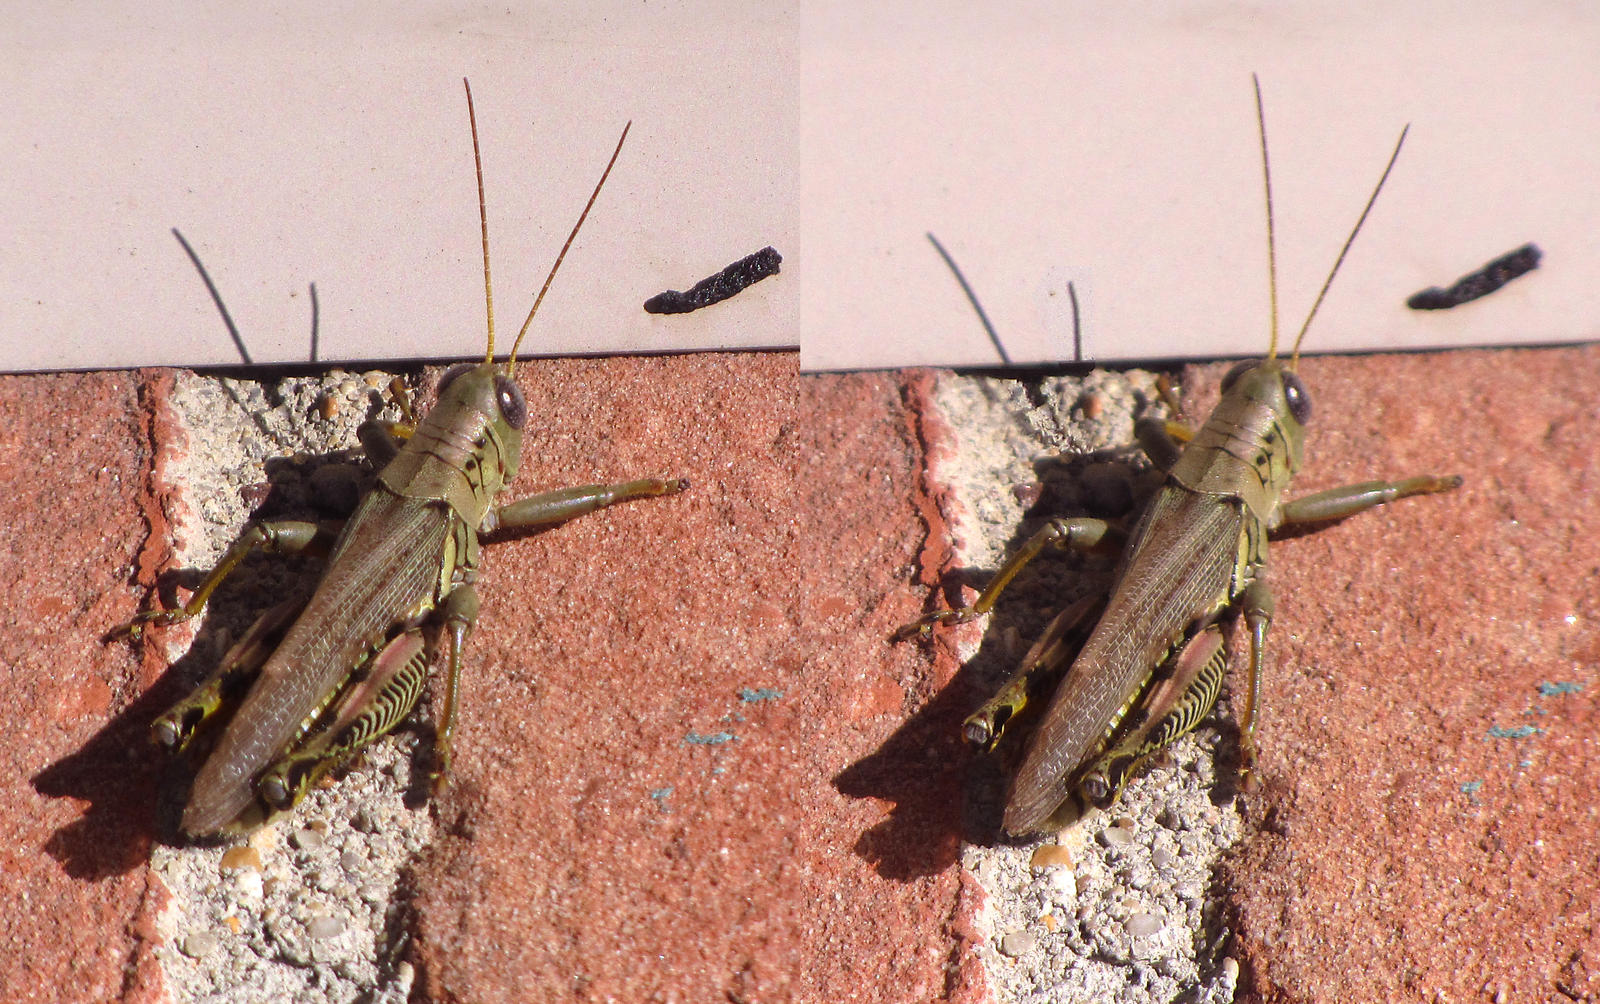 Stereograph - Grasshopper